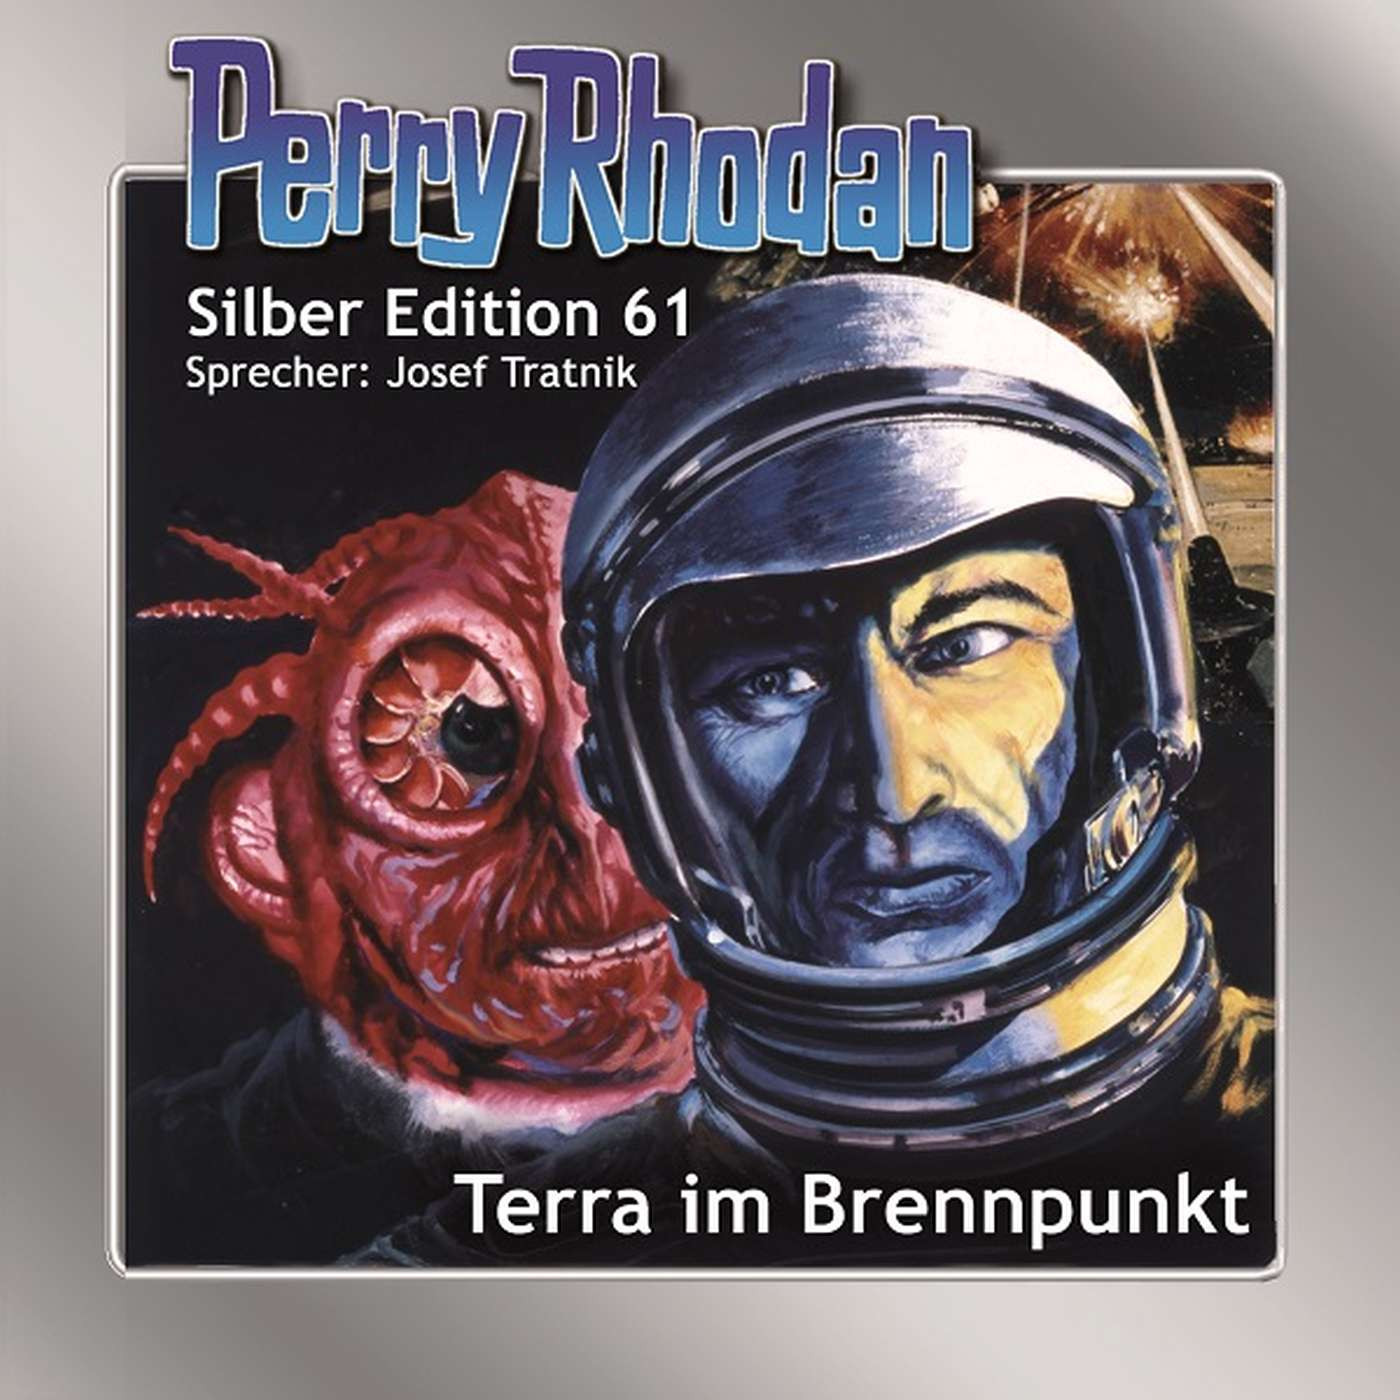 Perry Rhodan Silber Edition 61 Terra im Brennpunkt